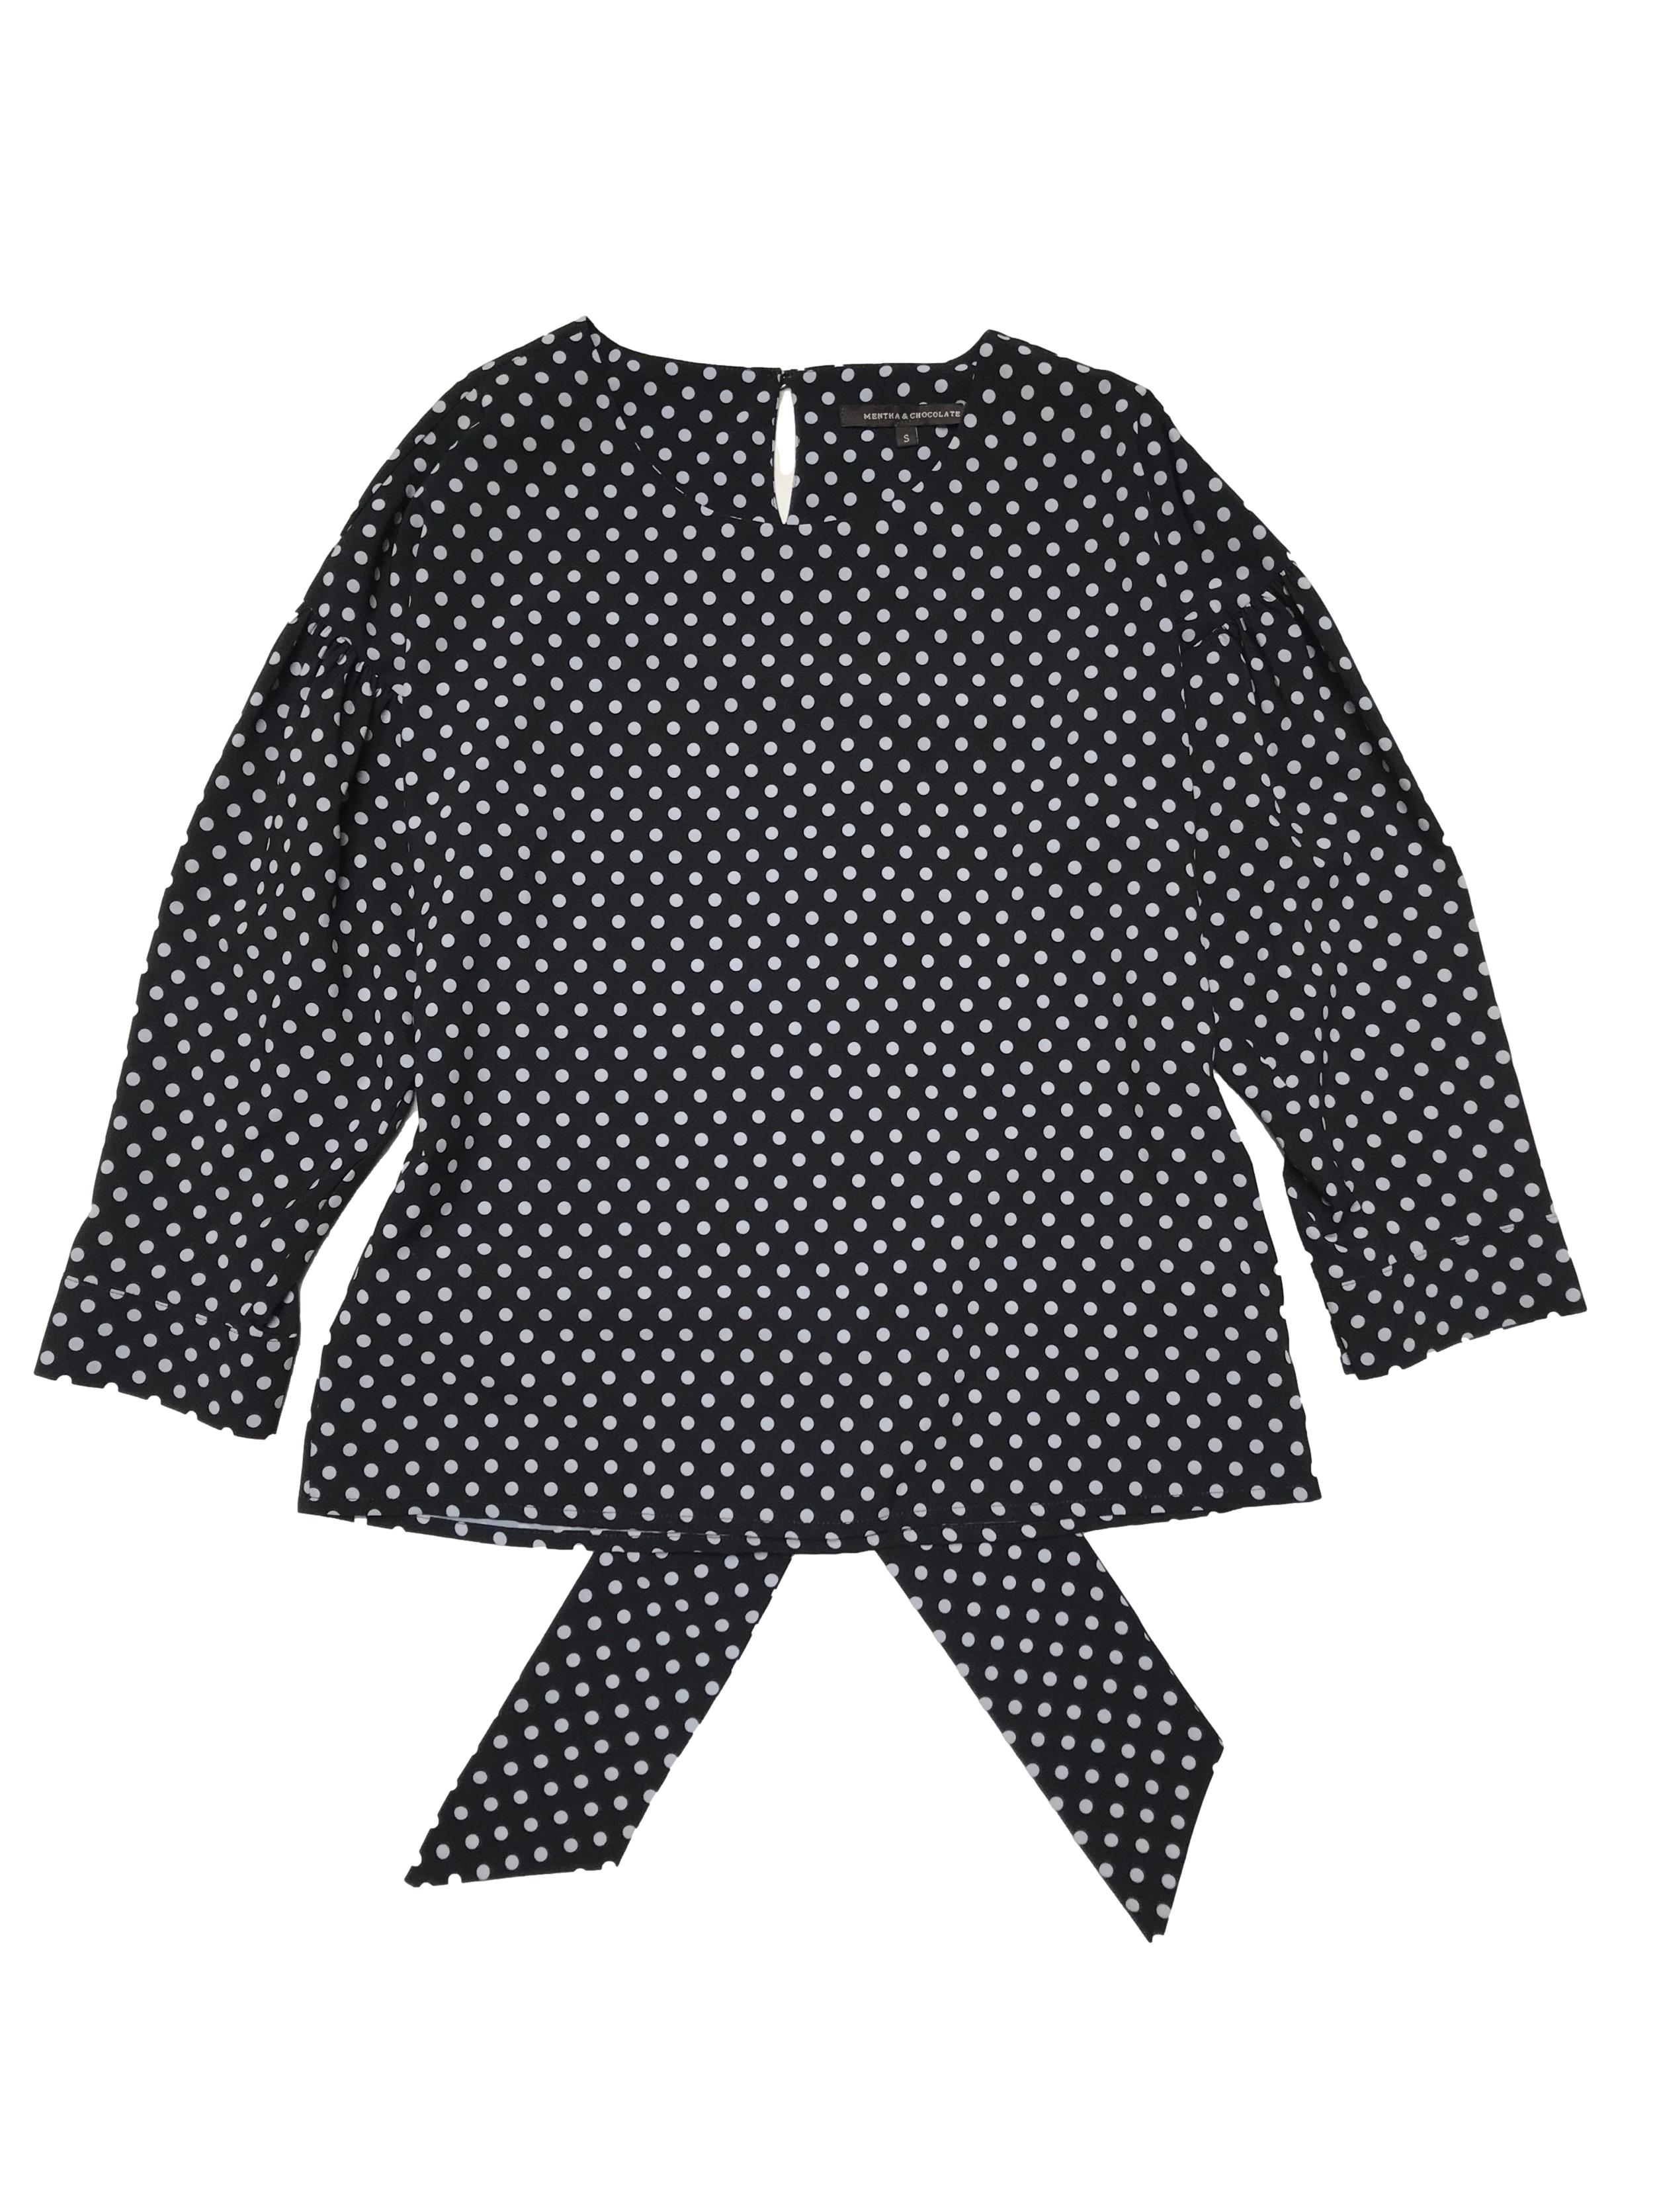 Blusa Mentha&chocolate negra con lunares blancos, botón posterior en el cuello, cinto para amarrar atrás, mangas 3/4 con volumen. Busto 100cm Largo 55cm. 